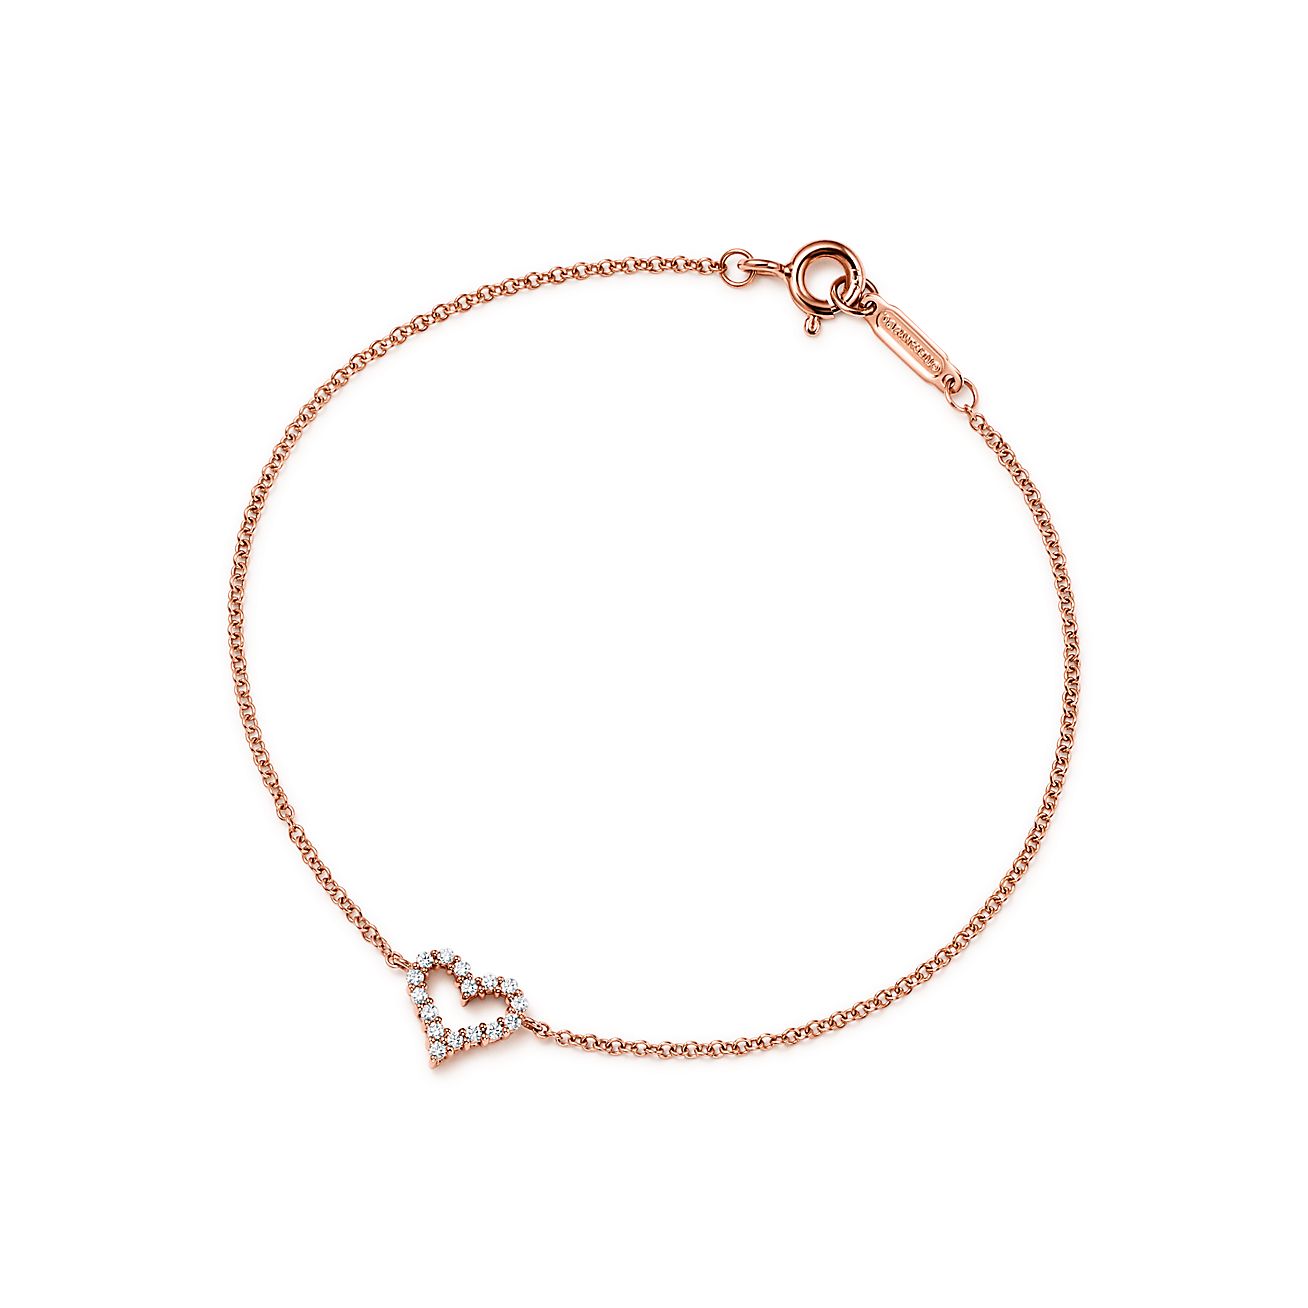 rose gold tiffany bracelet